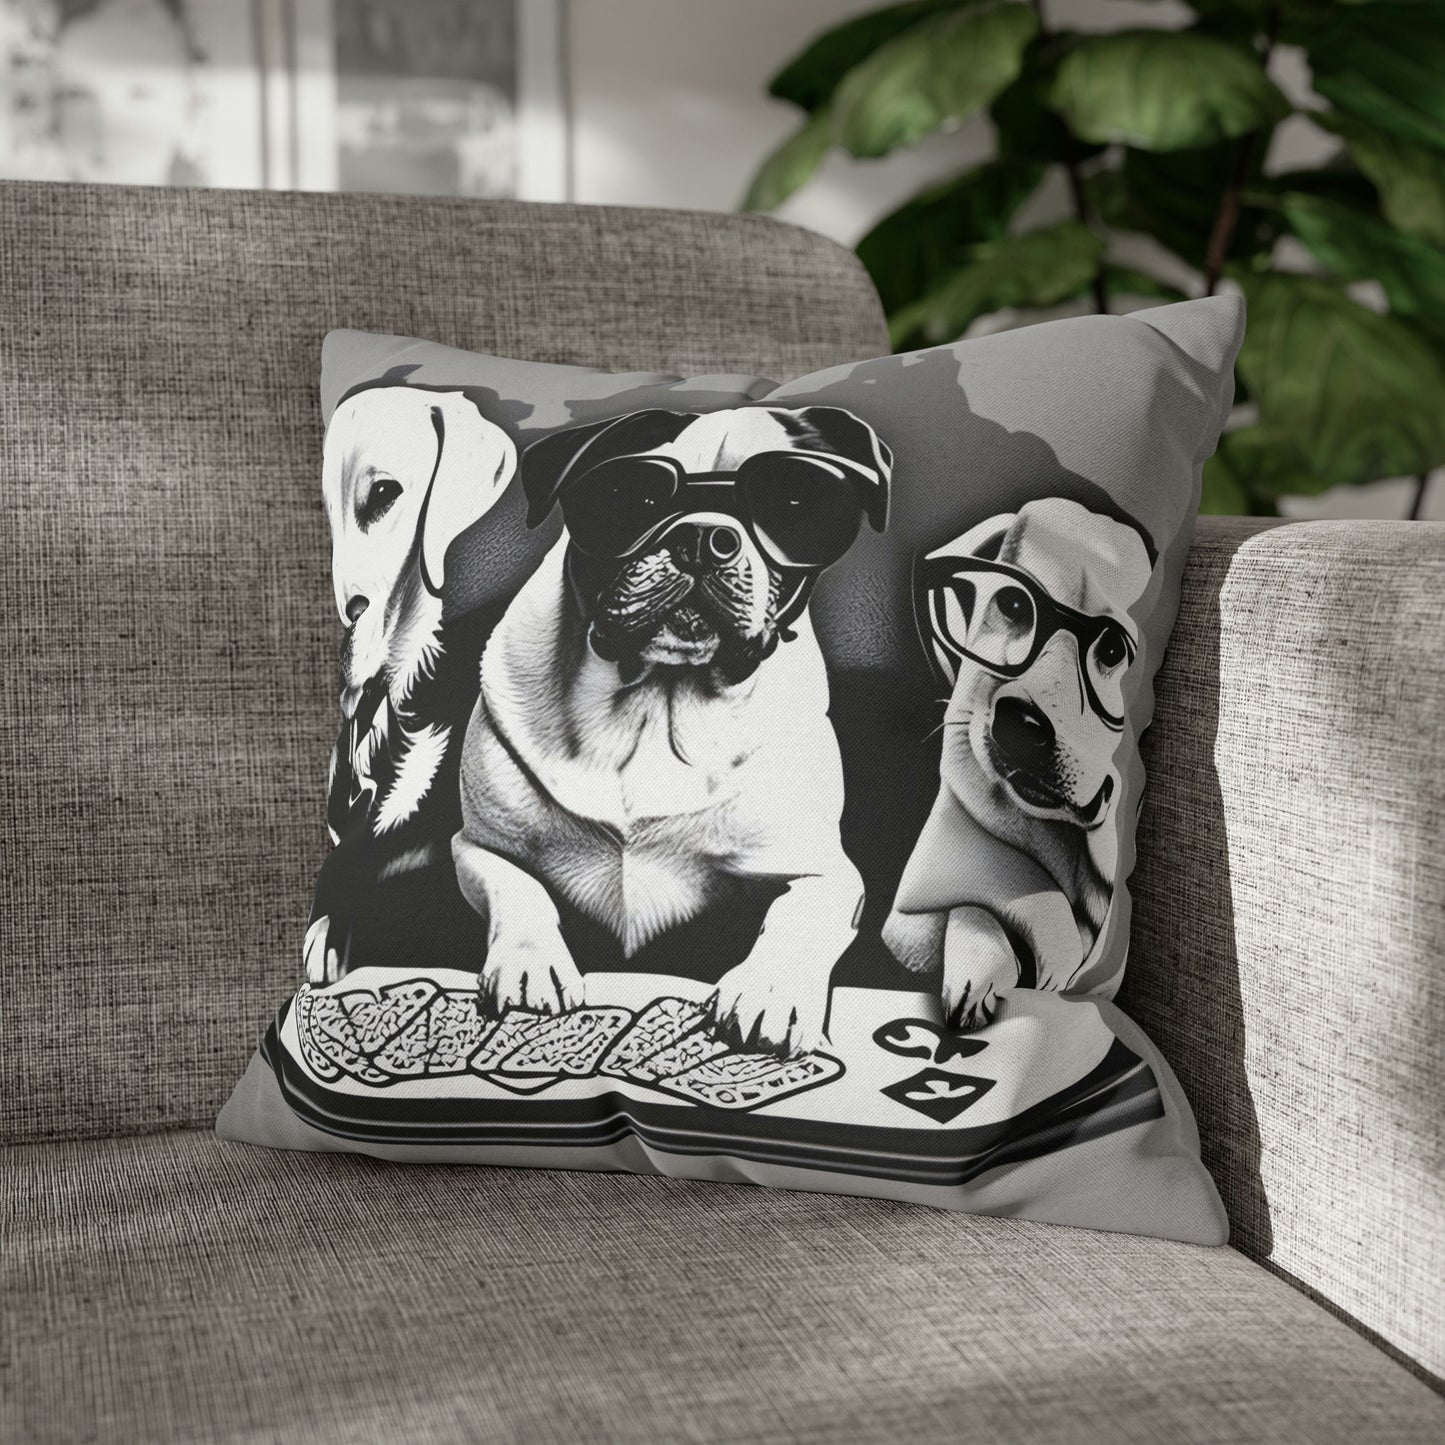 Grey Scripture Spun Polyester Square Pillow | Spun Polyester Square Pillow Case | Dogs Playing card | Dog Décor pillow